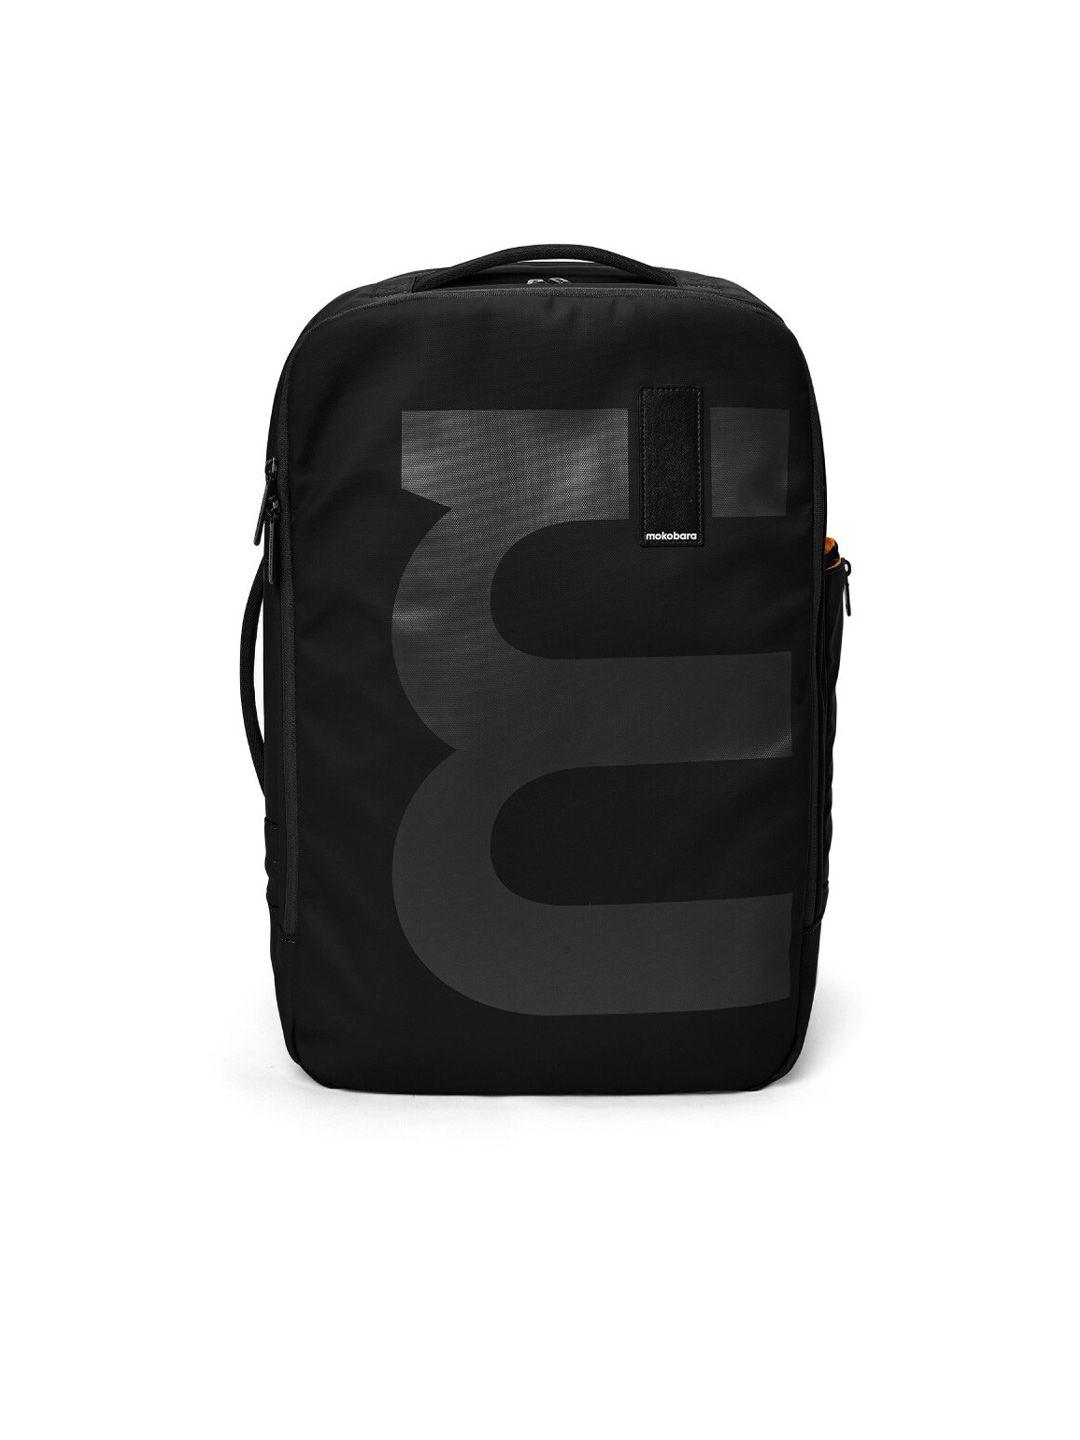 mokobara unisex black contrast detail backpack